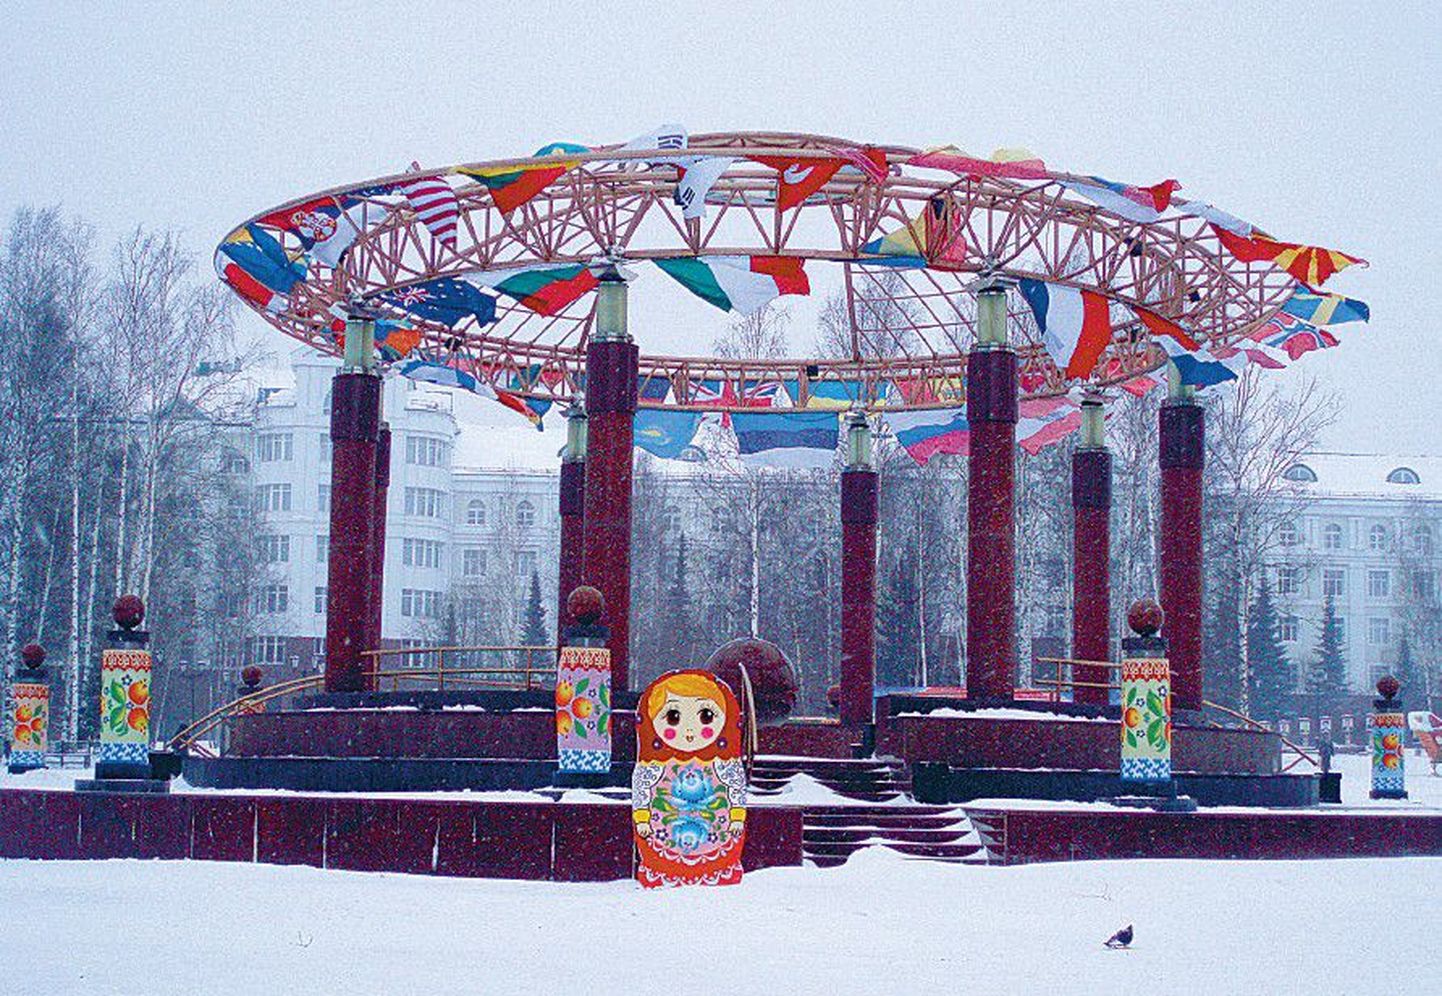 На главной площади Ханты-Мансийска гордо развевались флаги стран-участниц чемпионата мира. Разумеется, не обошлось и без матрешки.